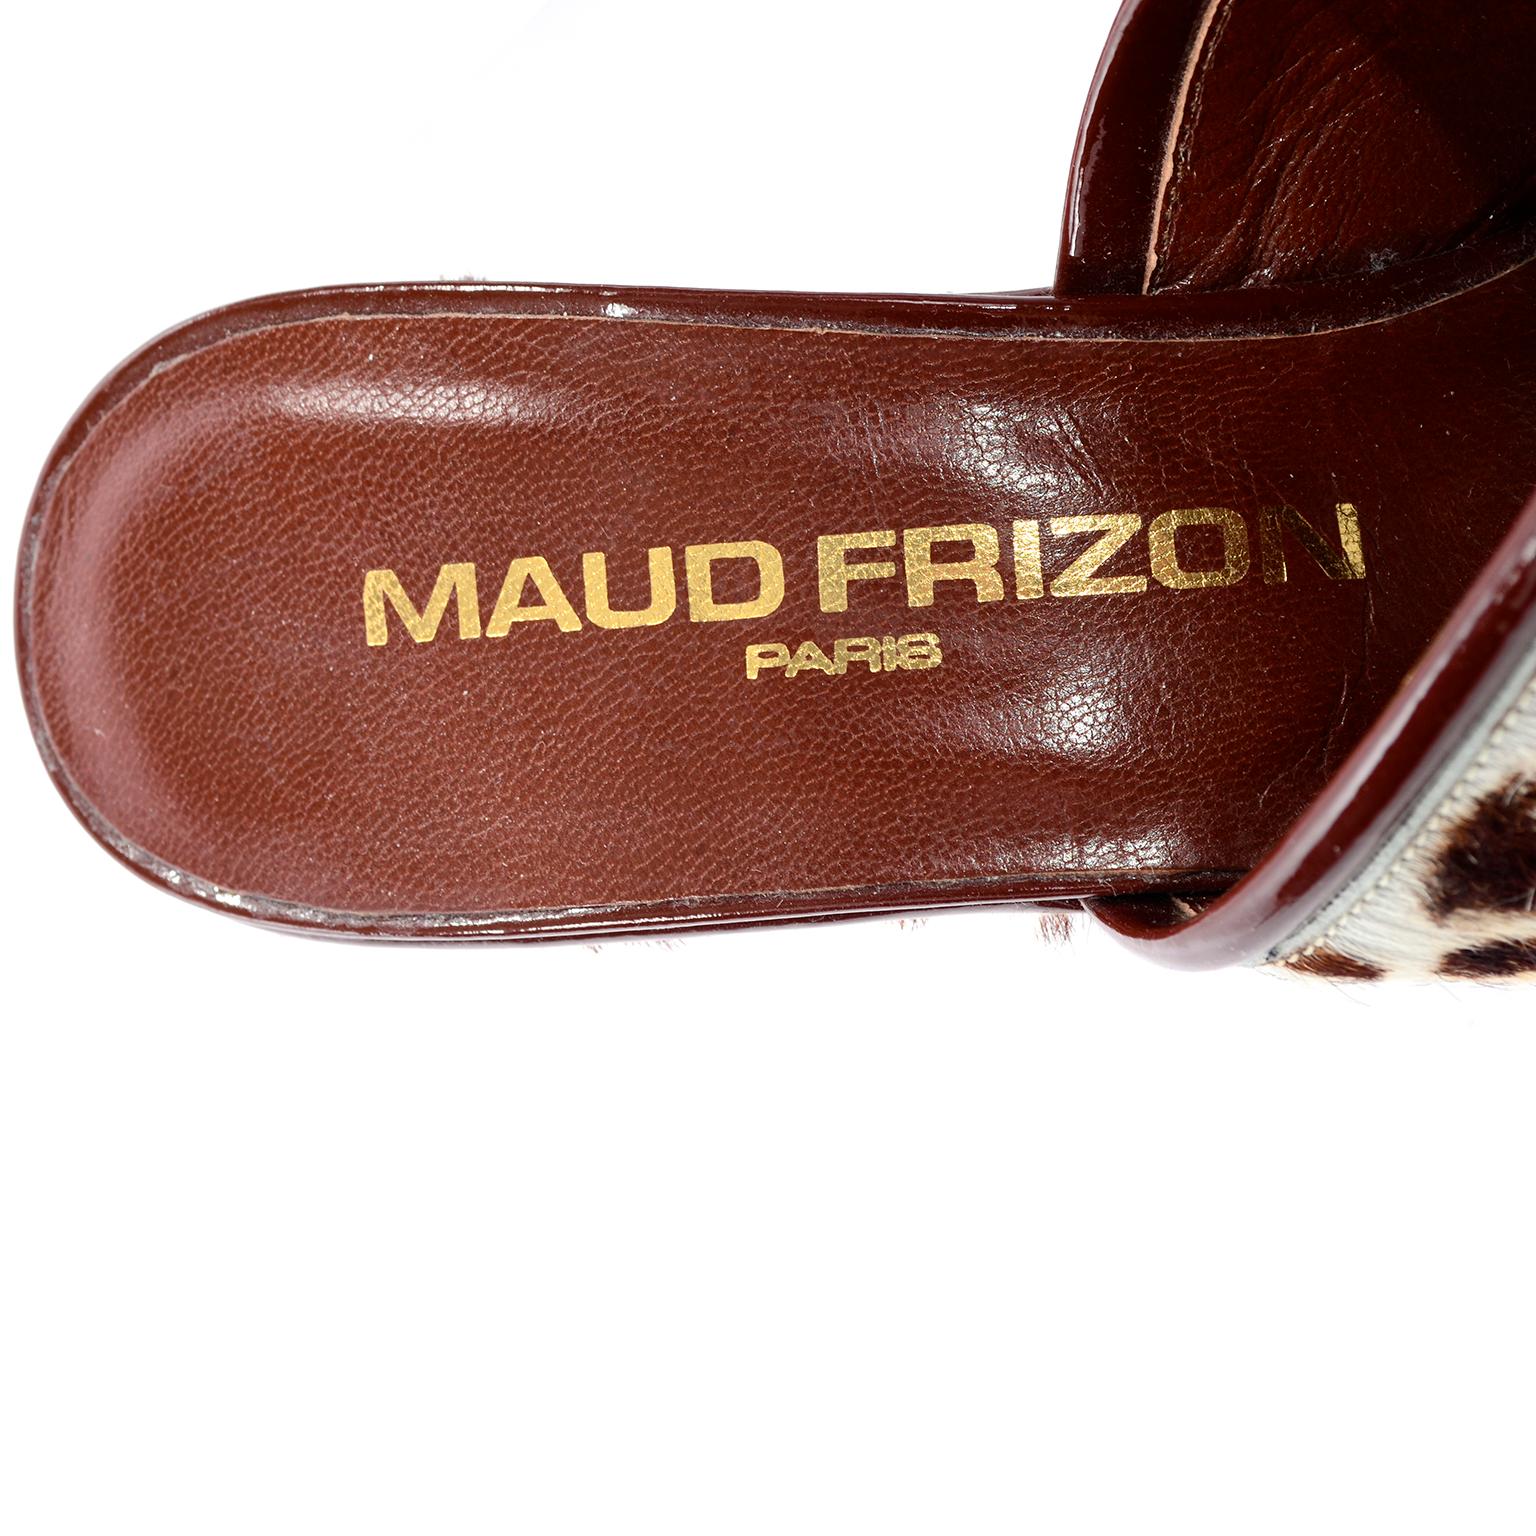 New Maud Frizon Paris Wedge Heel Open Toe Shoes in Pony Fur Giraffe Print 7.5 2